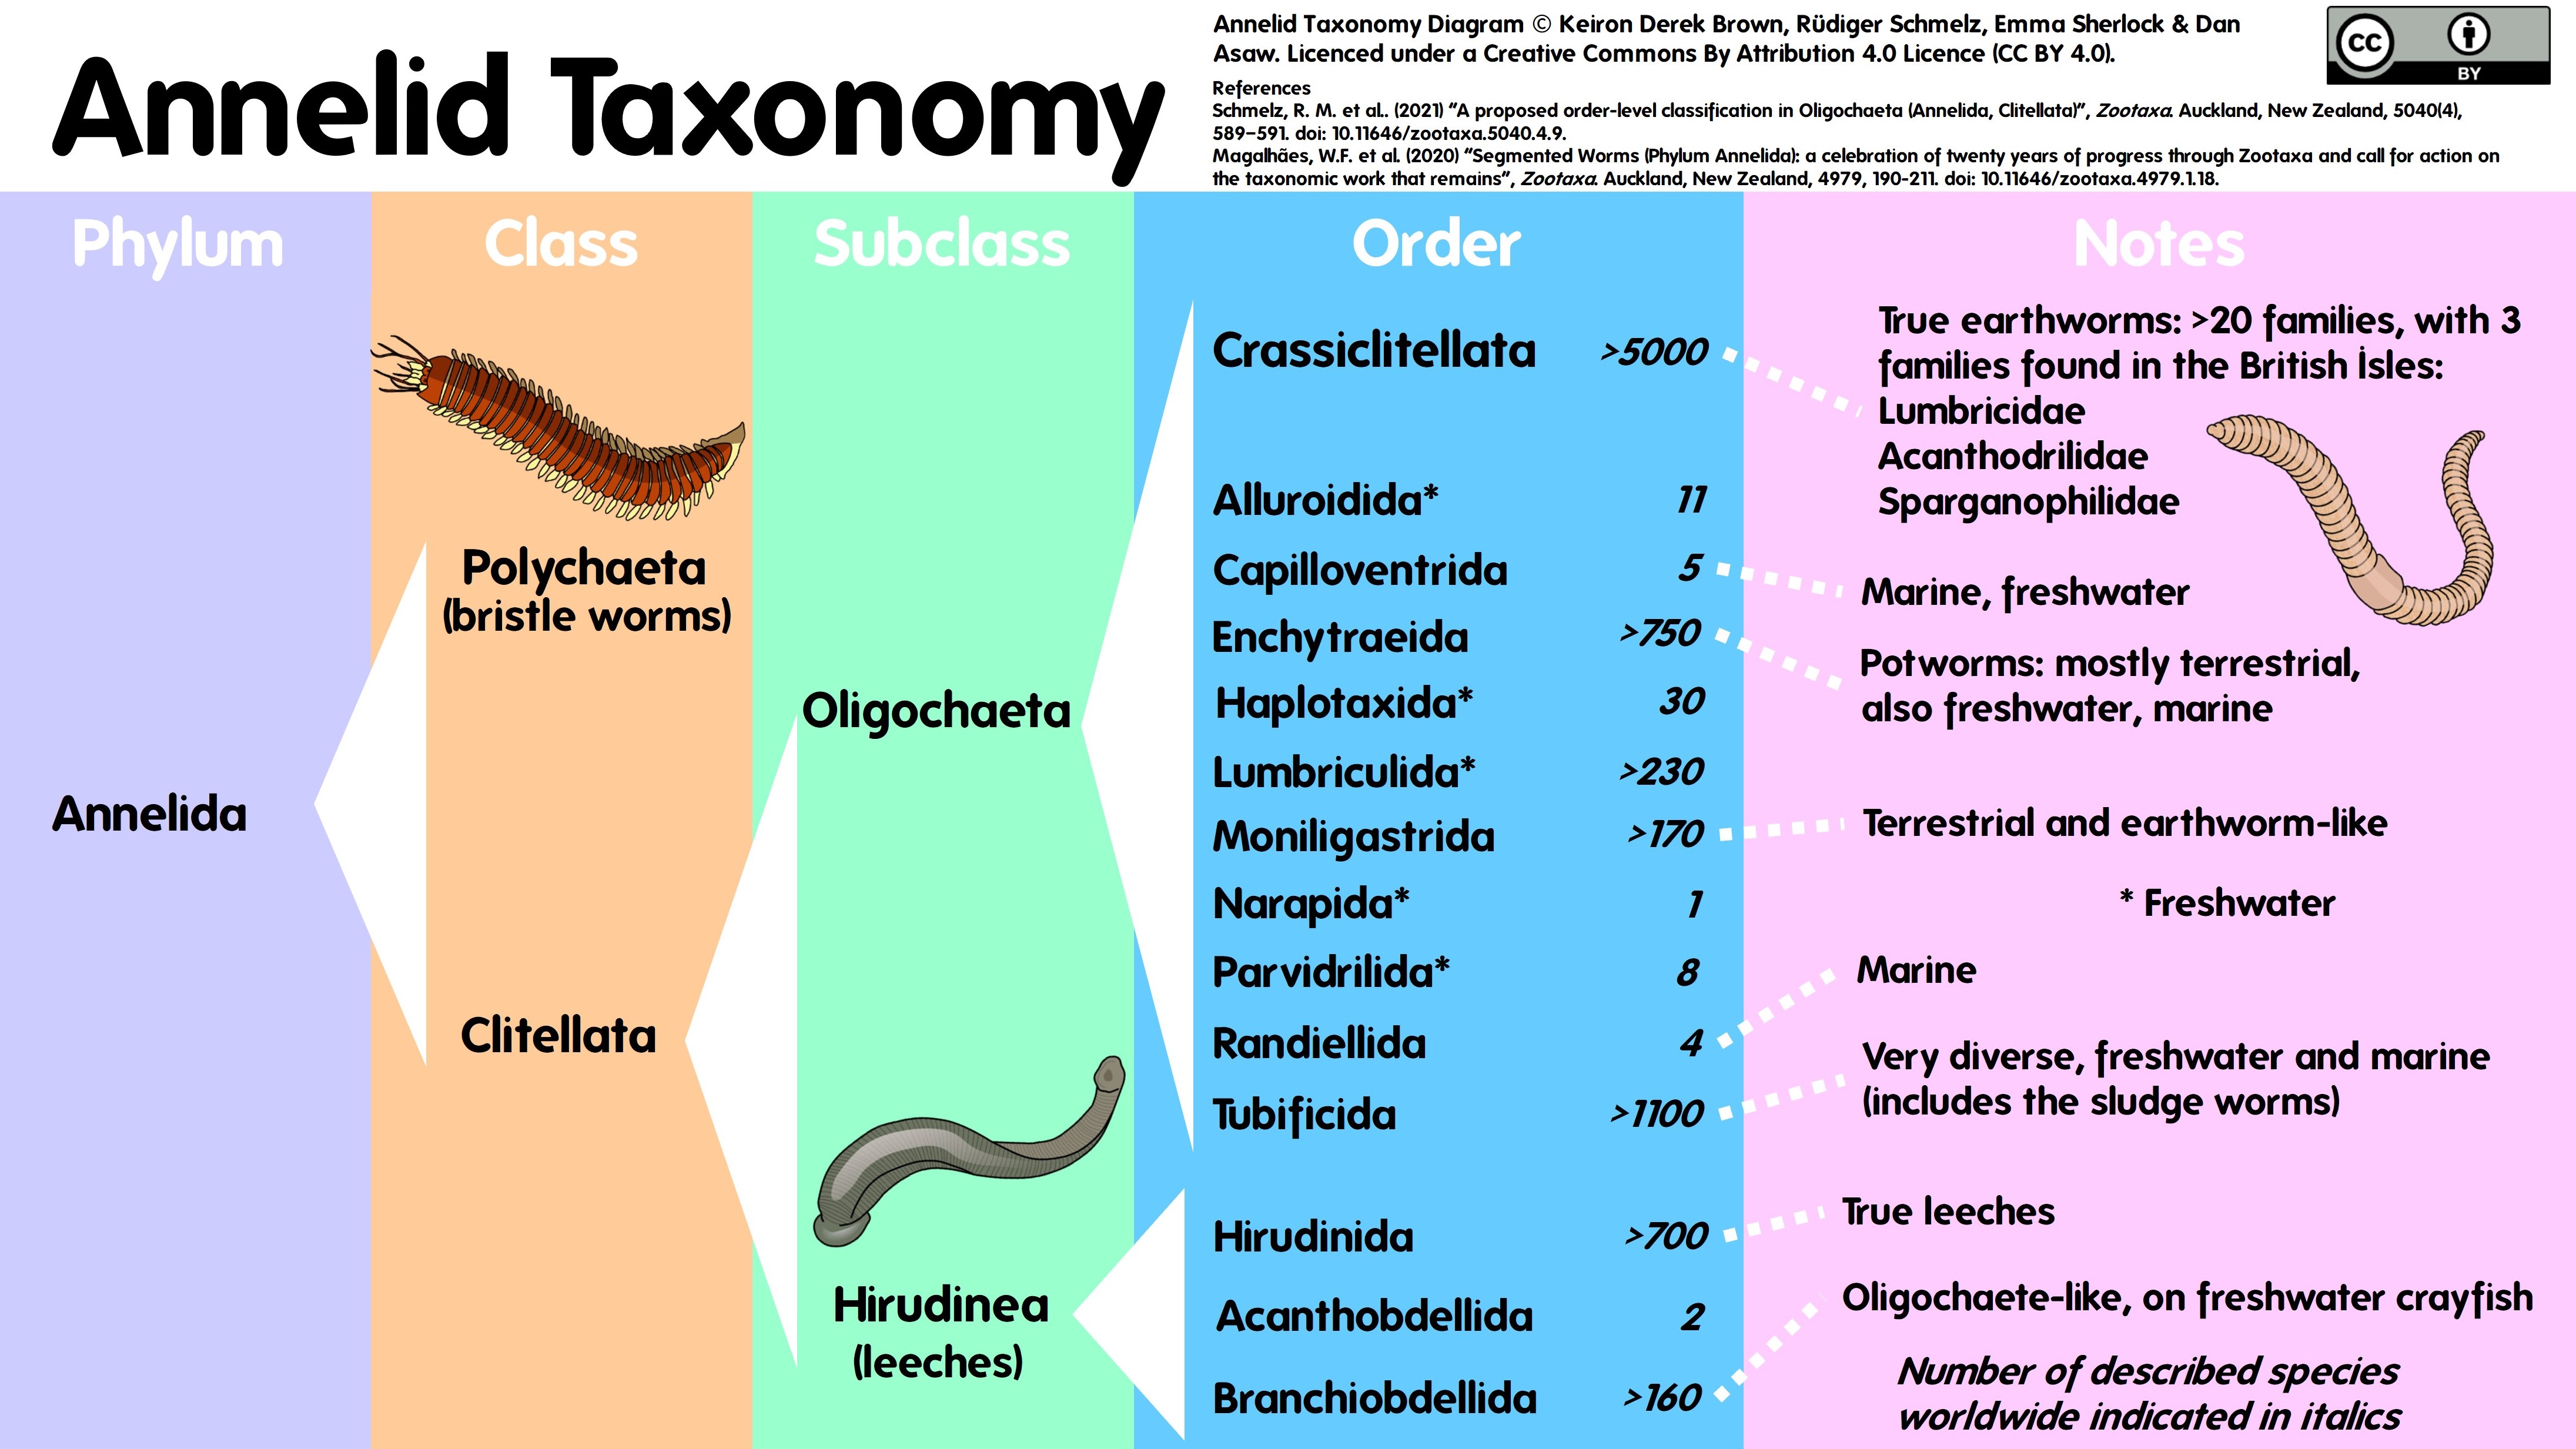 Annelida taxonomy diagram